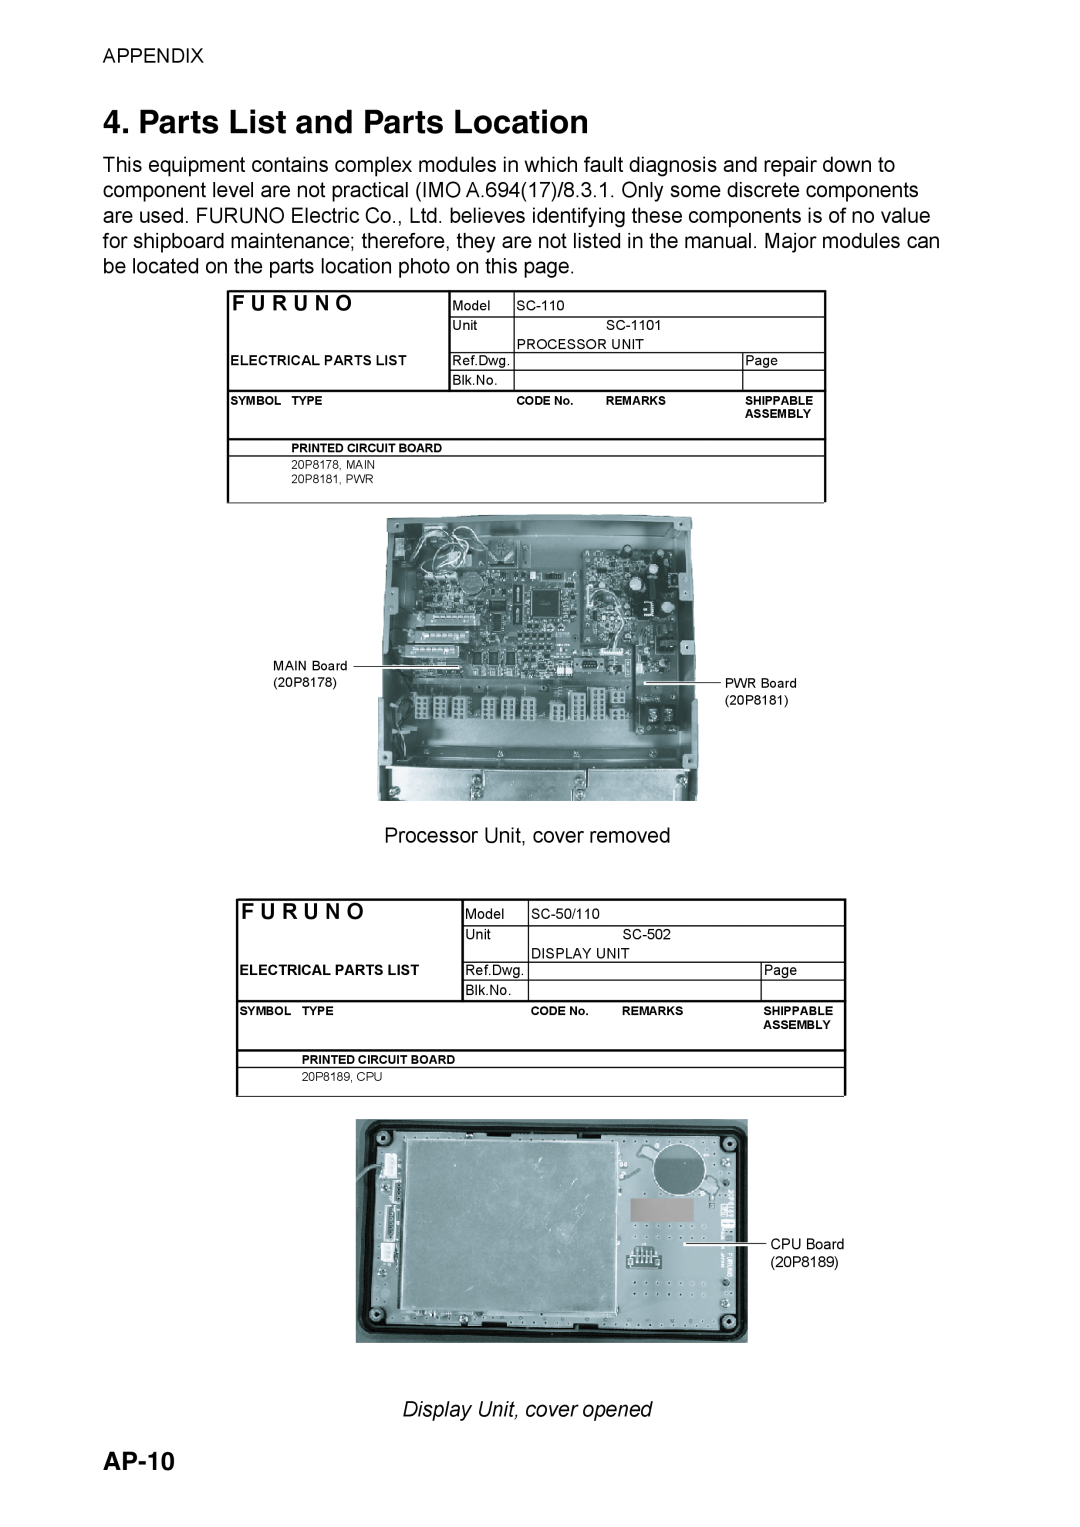 Furuno SC-110 manual Parts List and Parts Location, AP-10, F U R U N O, Display Unit, cover opened 